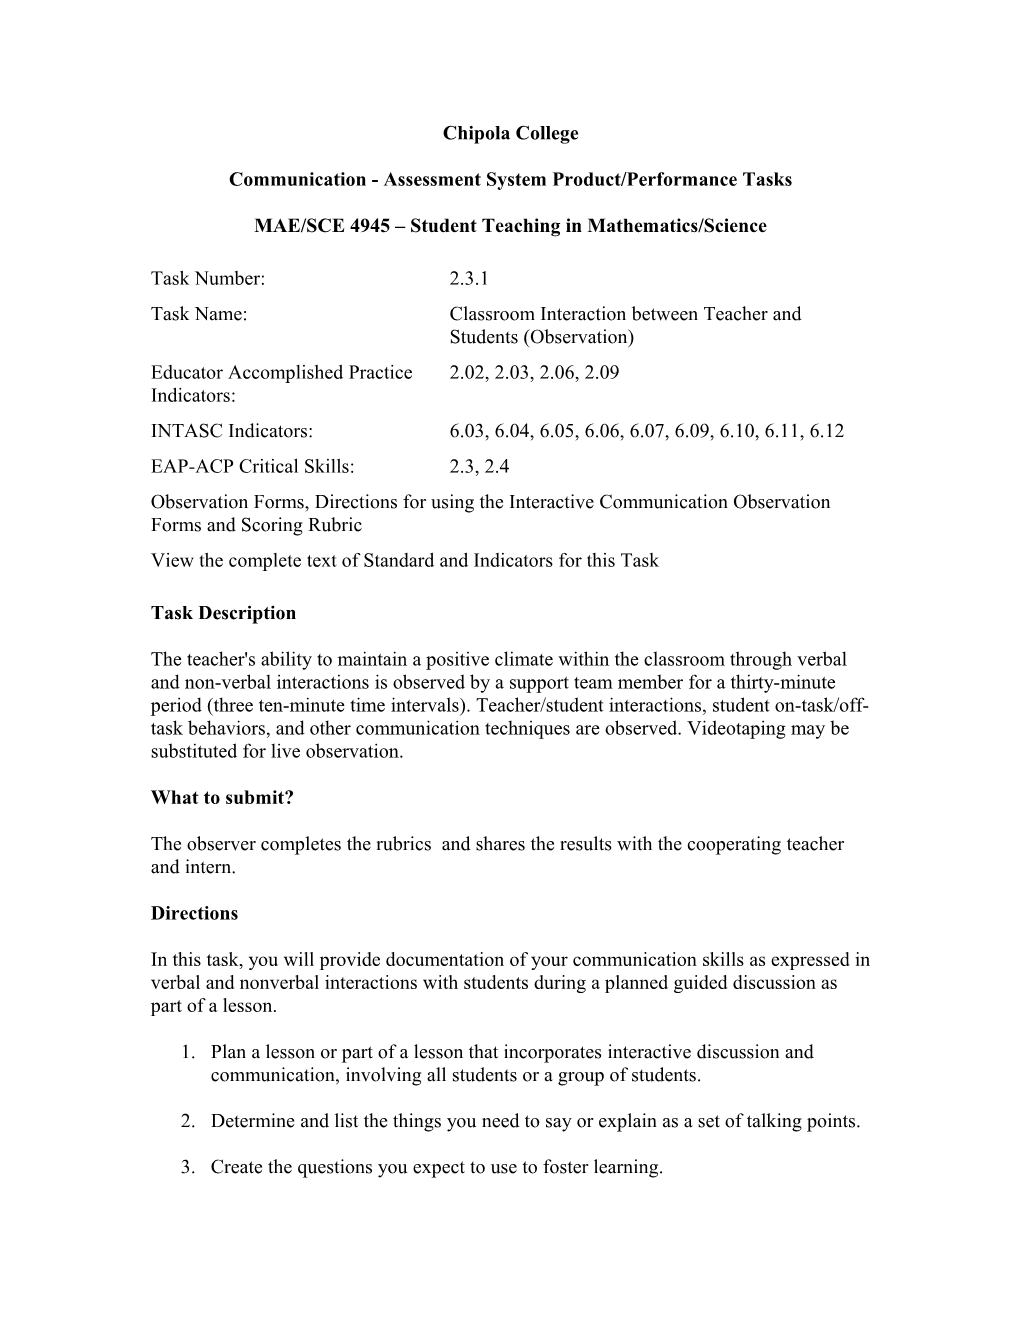 Communication - Assessment System Product/Performance Tasks